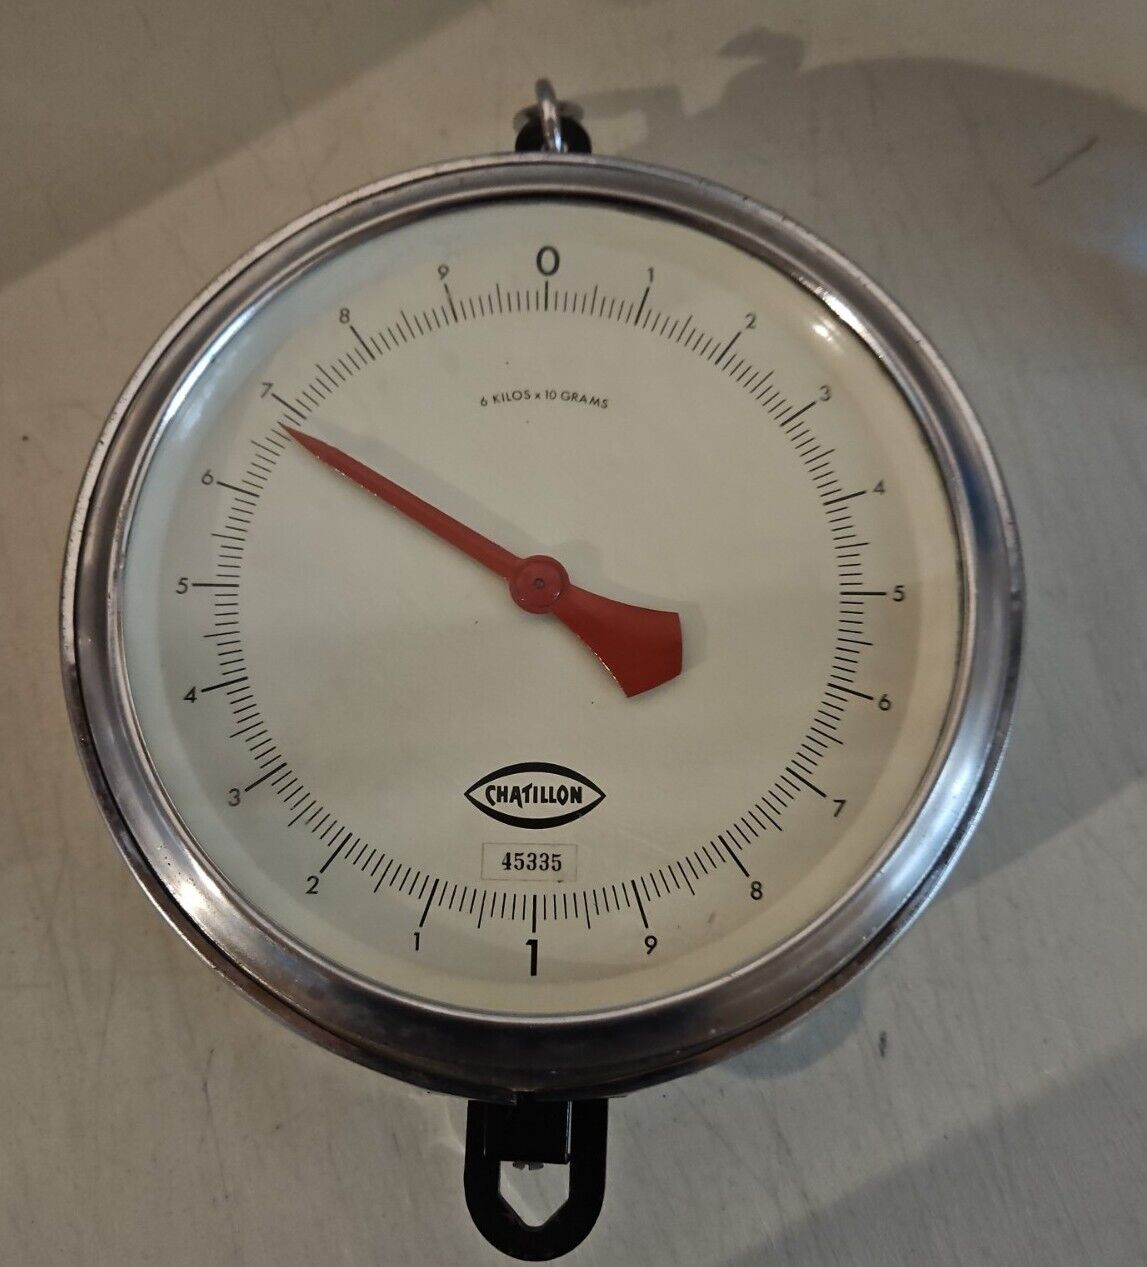 Vintage Chatillon Scale 6 Kilos X 10 Grams 45335